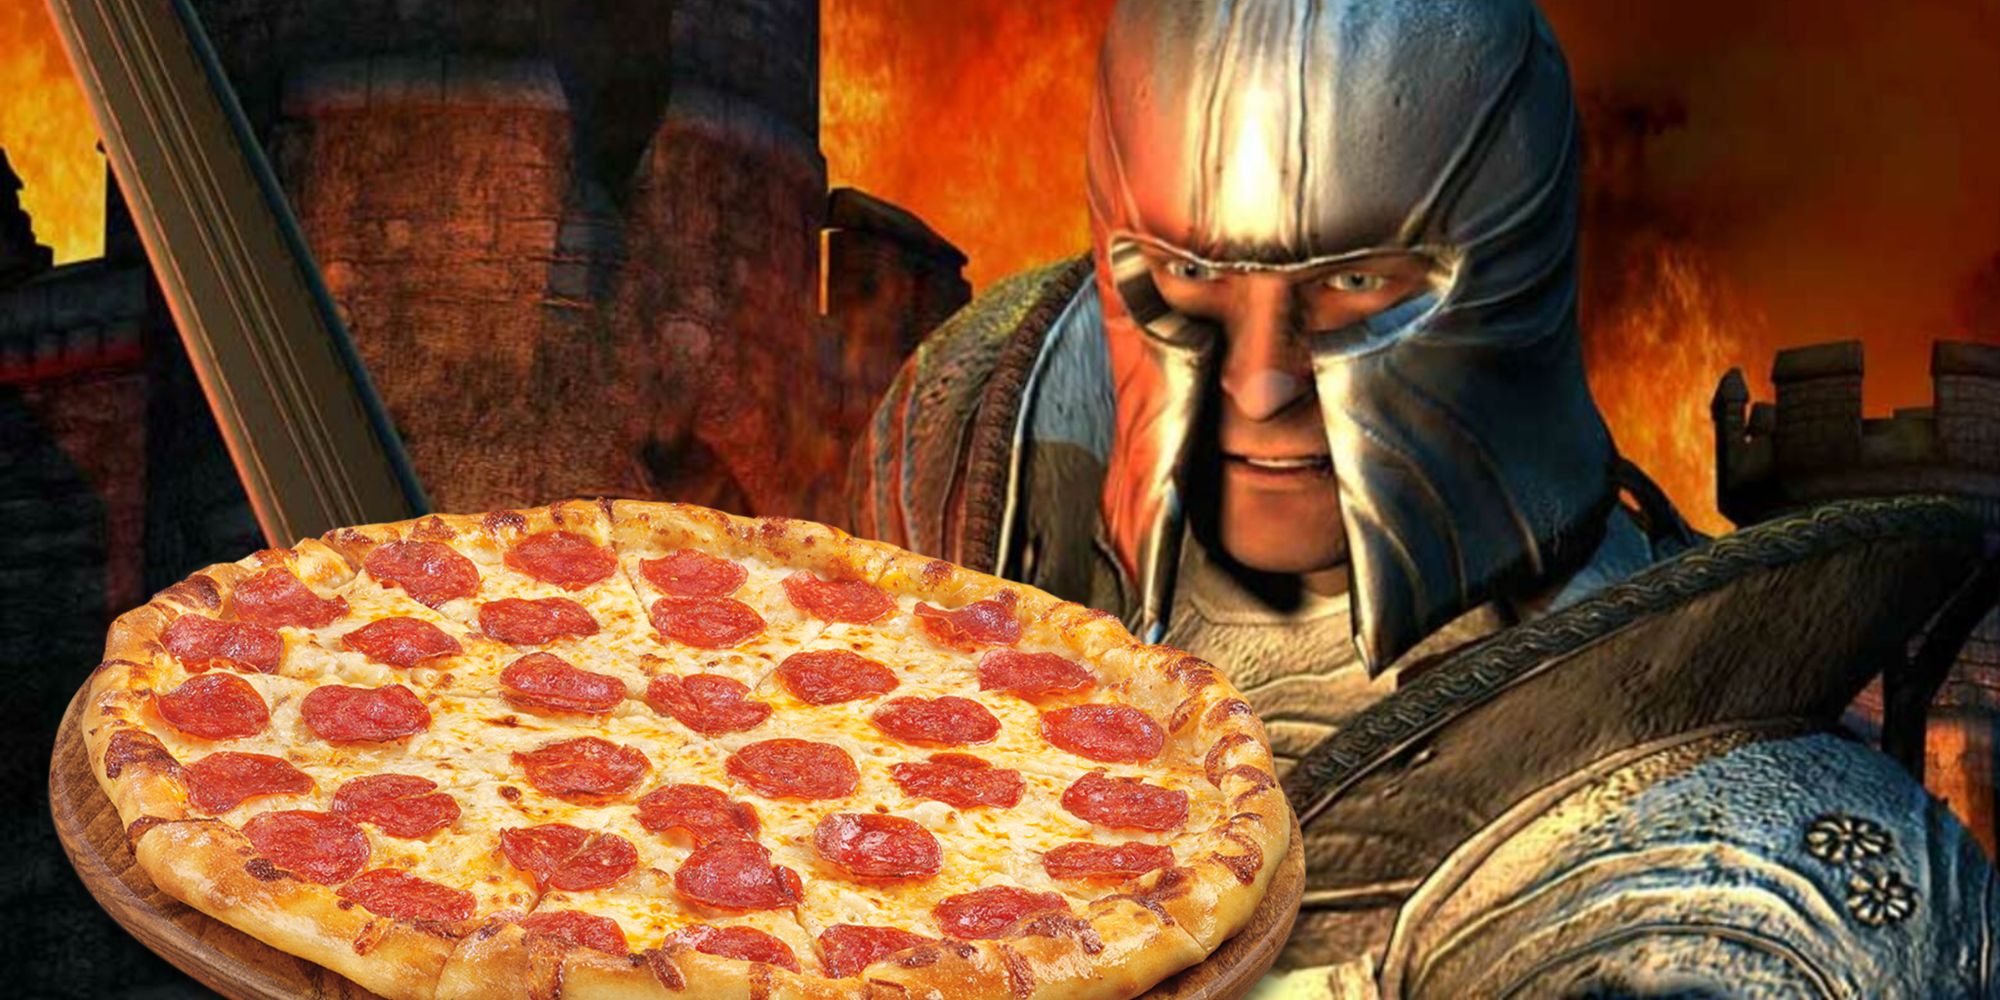 Oblivion Pizza